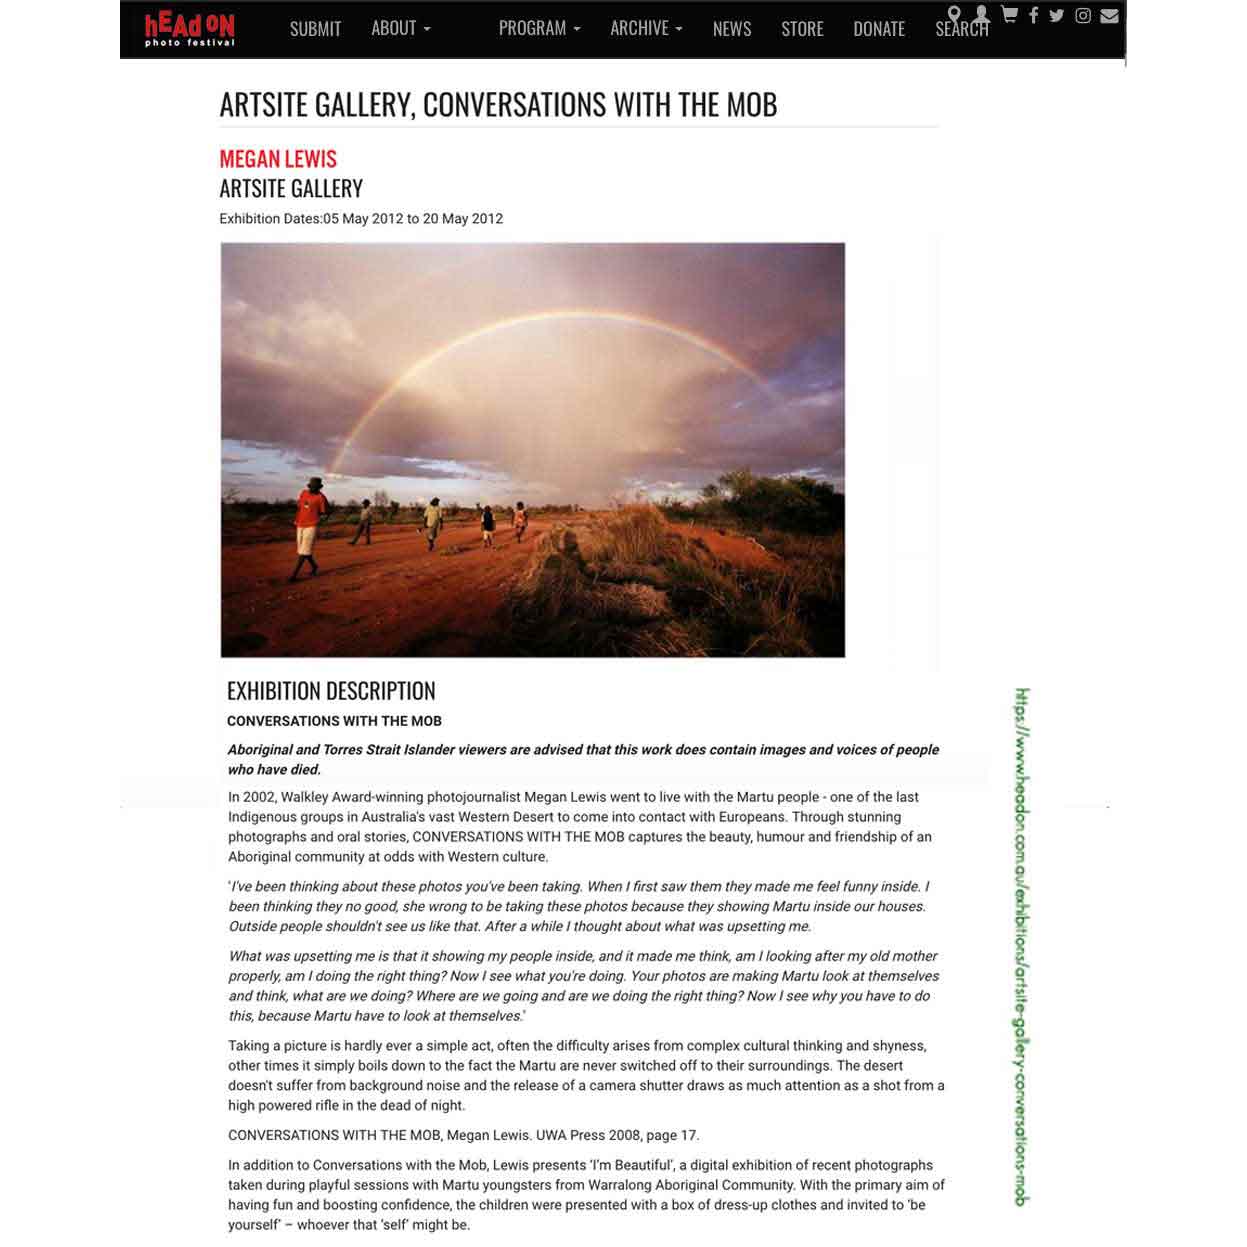 Artsite  Contemporary, HeadOn Photo Festival 2012 Featured Exhibition: Conversations with the Mob.